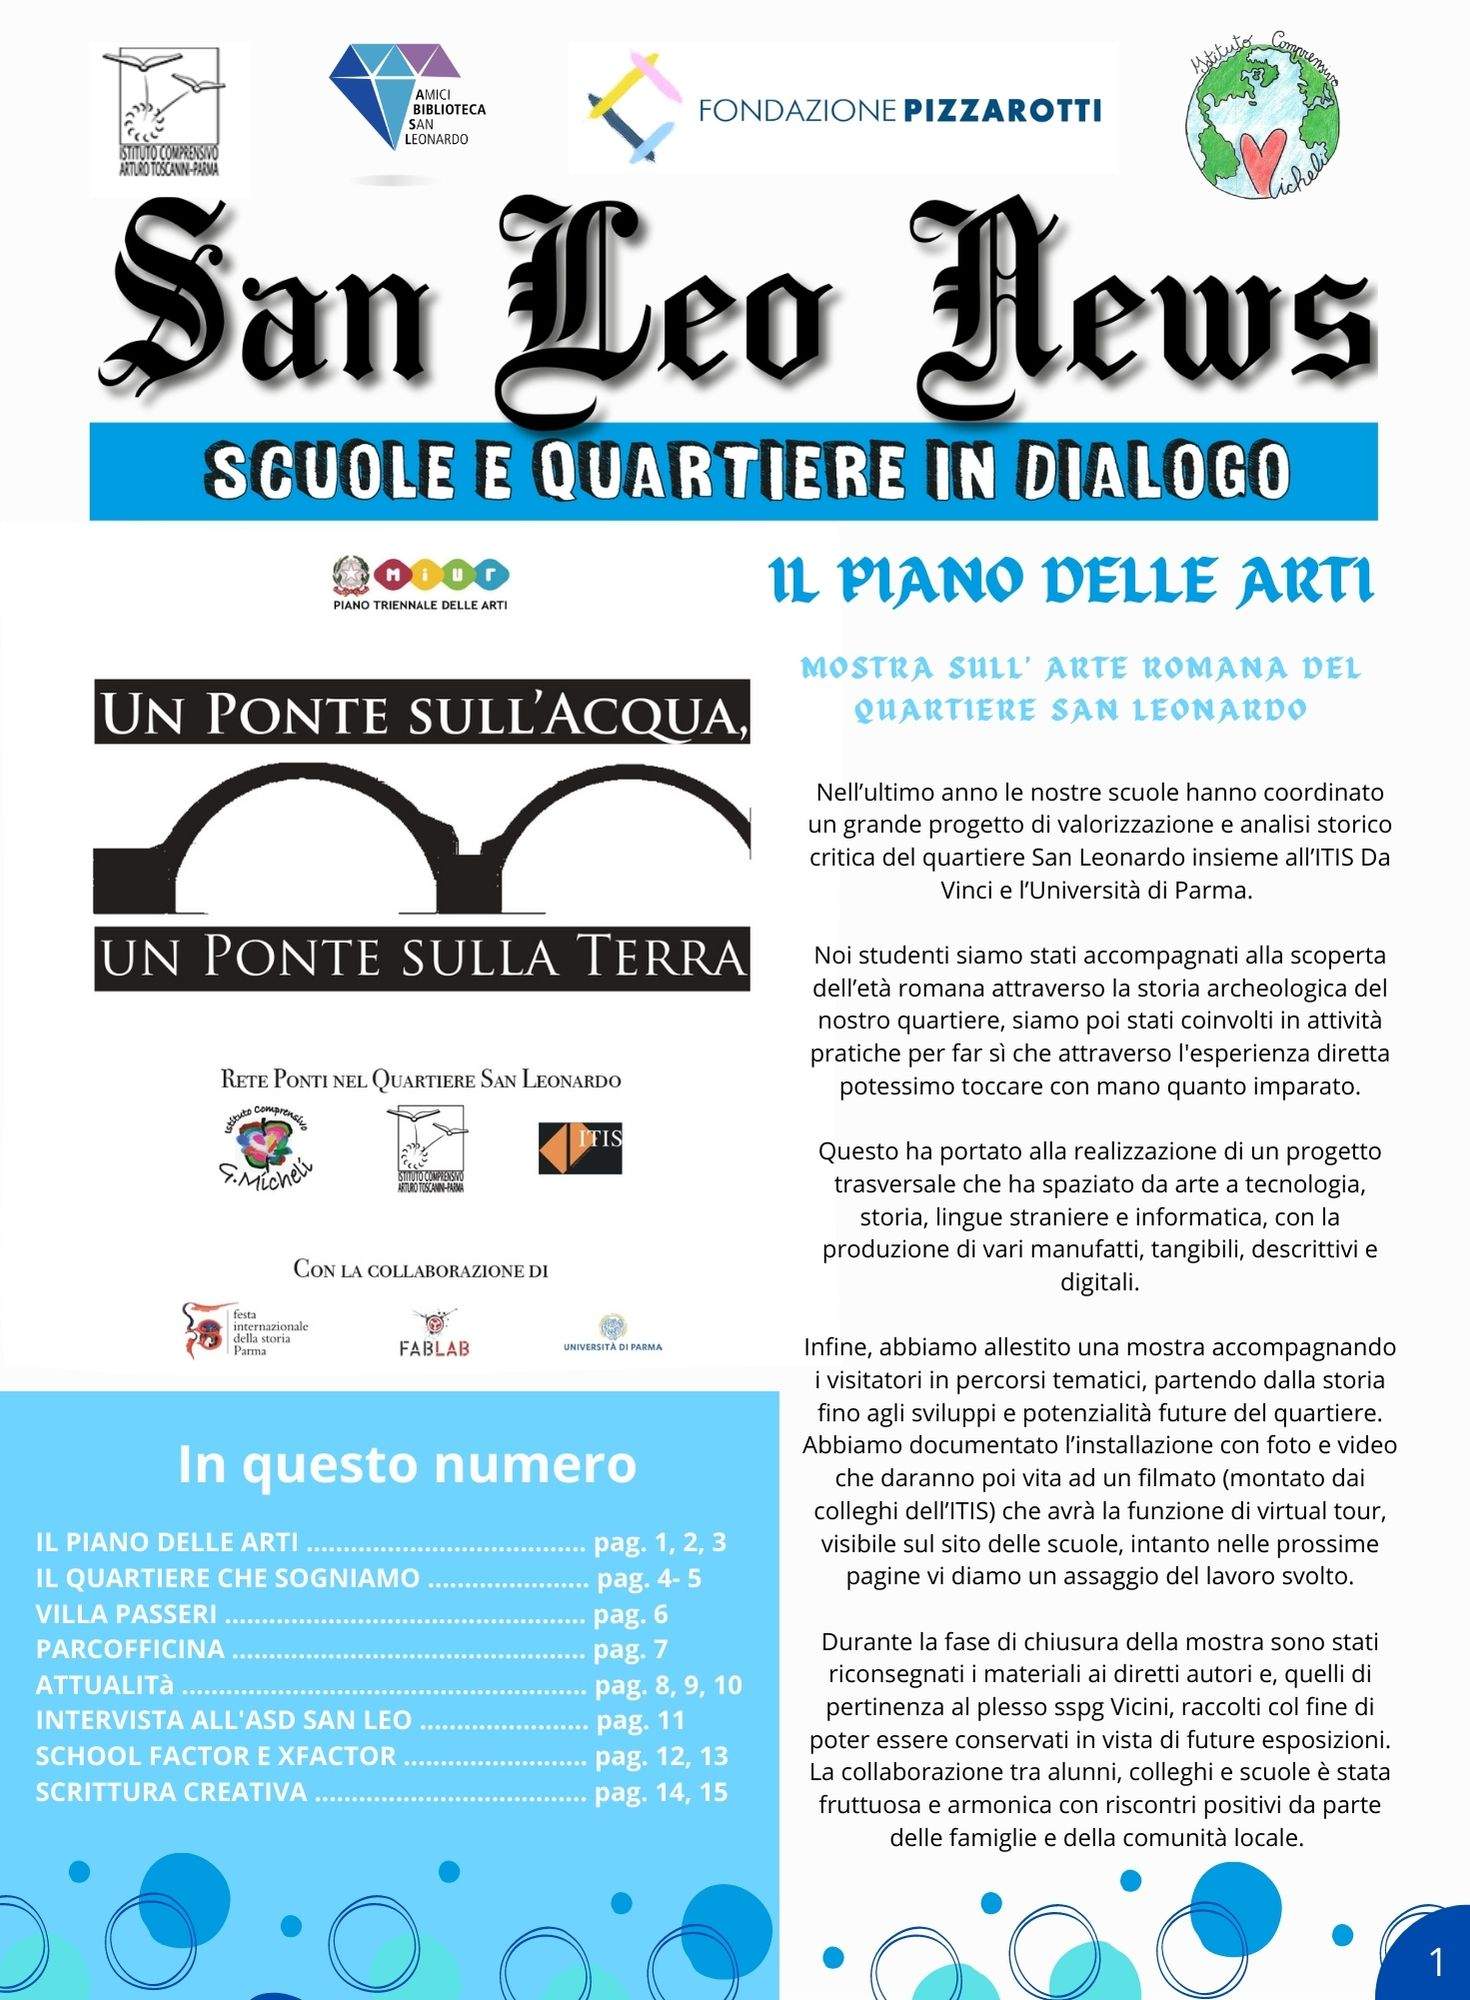 San Leo News n.1/2022